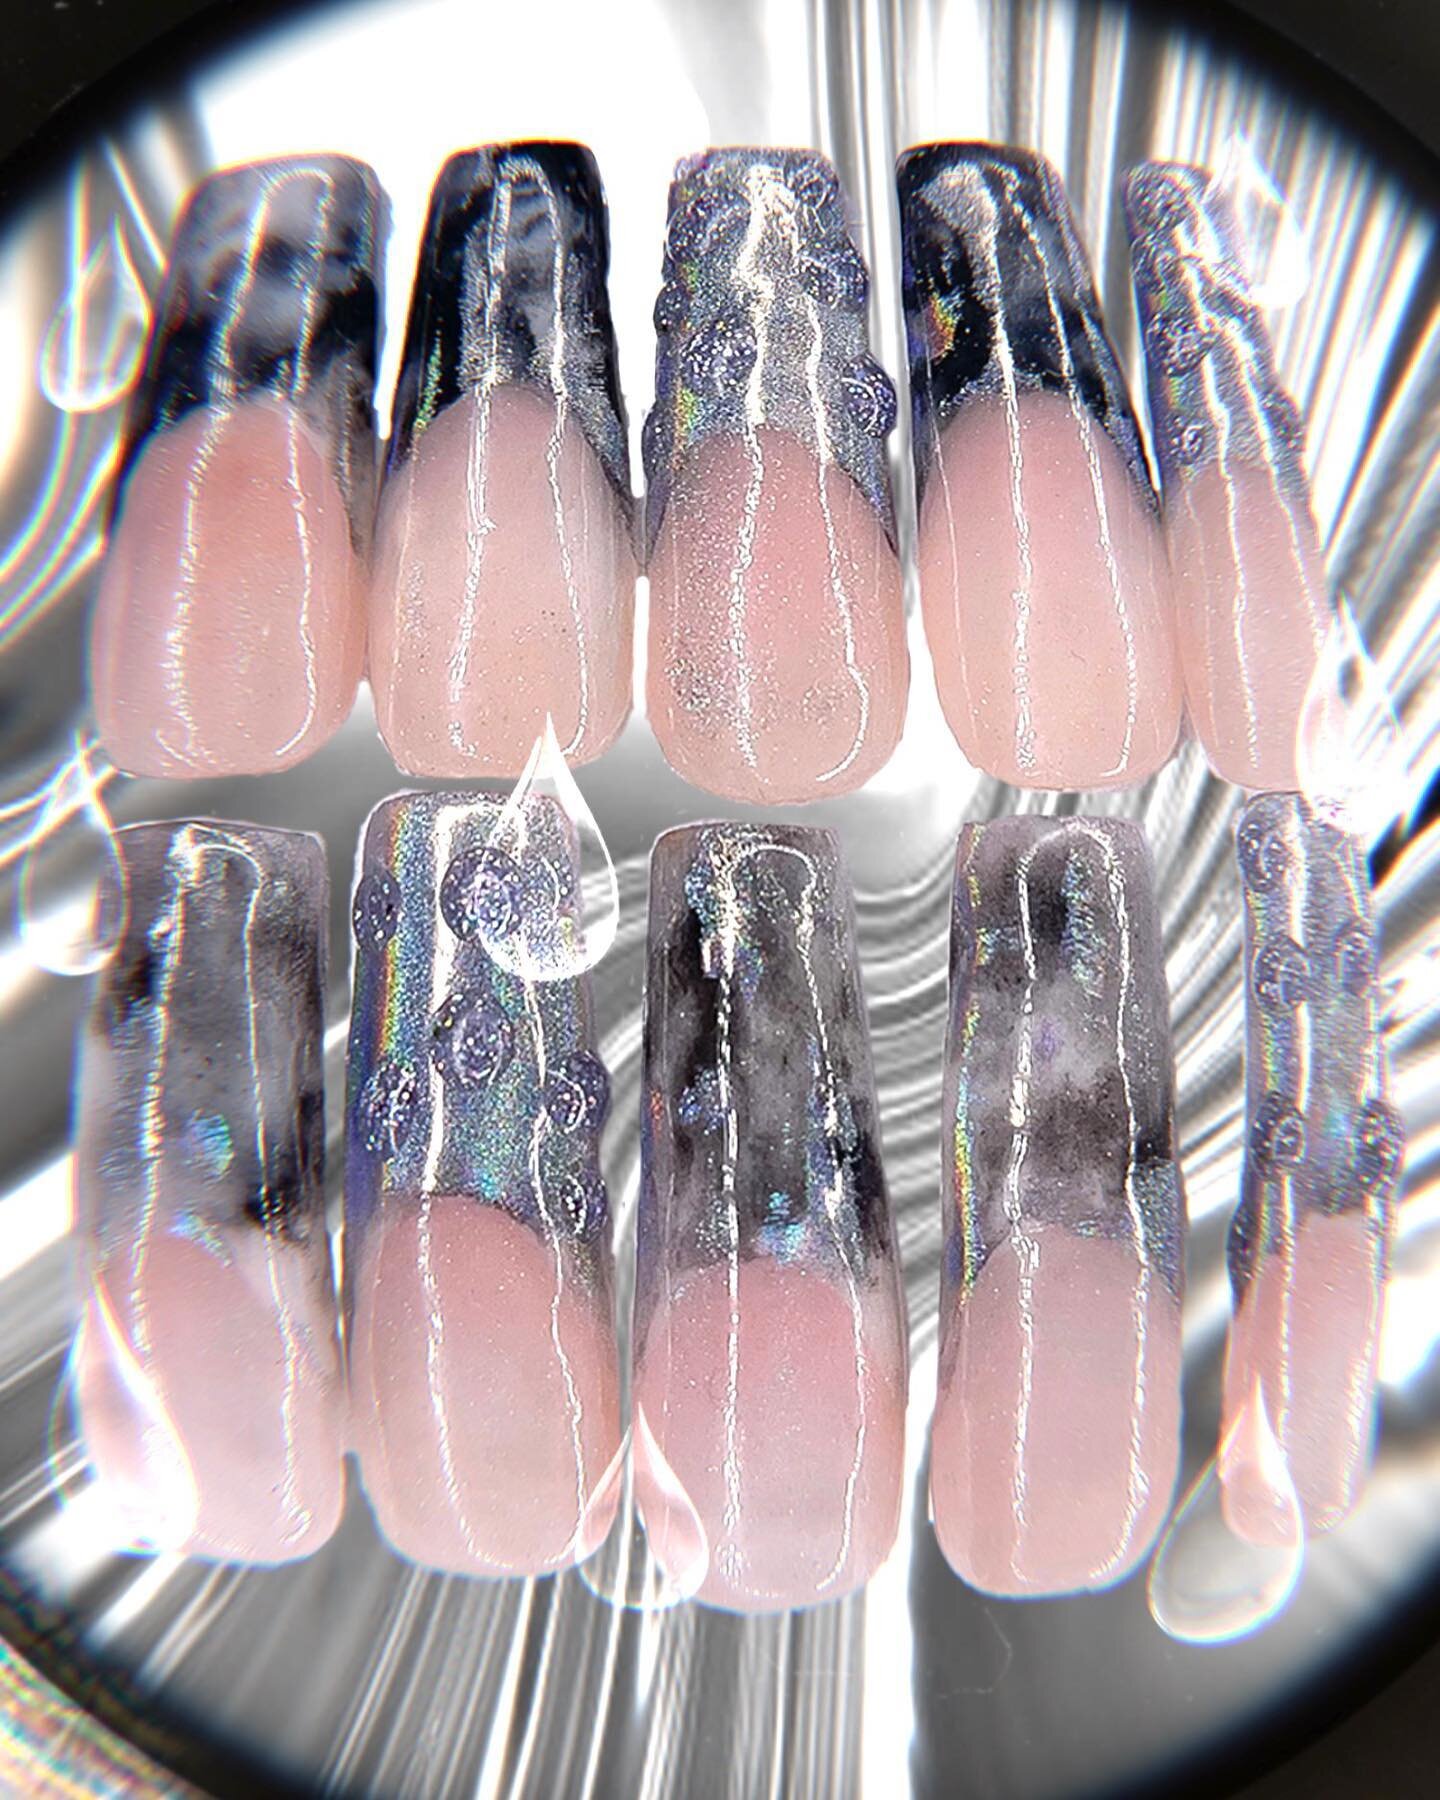 *NEW SET ALERT* 
&ldquo;FUTURAMA&rdquo; long tapered square set. 
Now available on etsy. 

#pressonnails #pressonnailsforsale #pressonnailset #pressonnails💅🏻 #nailtech #silvernails #chromenails #chromenails😍💅💣 #holographicnails #abstractnails #l